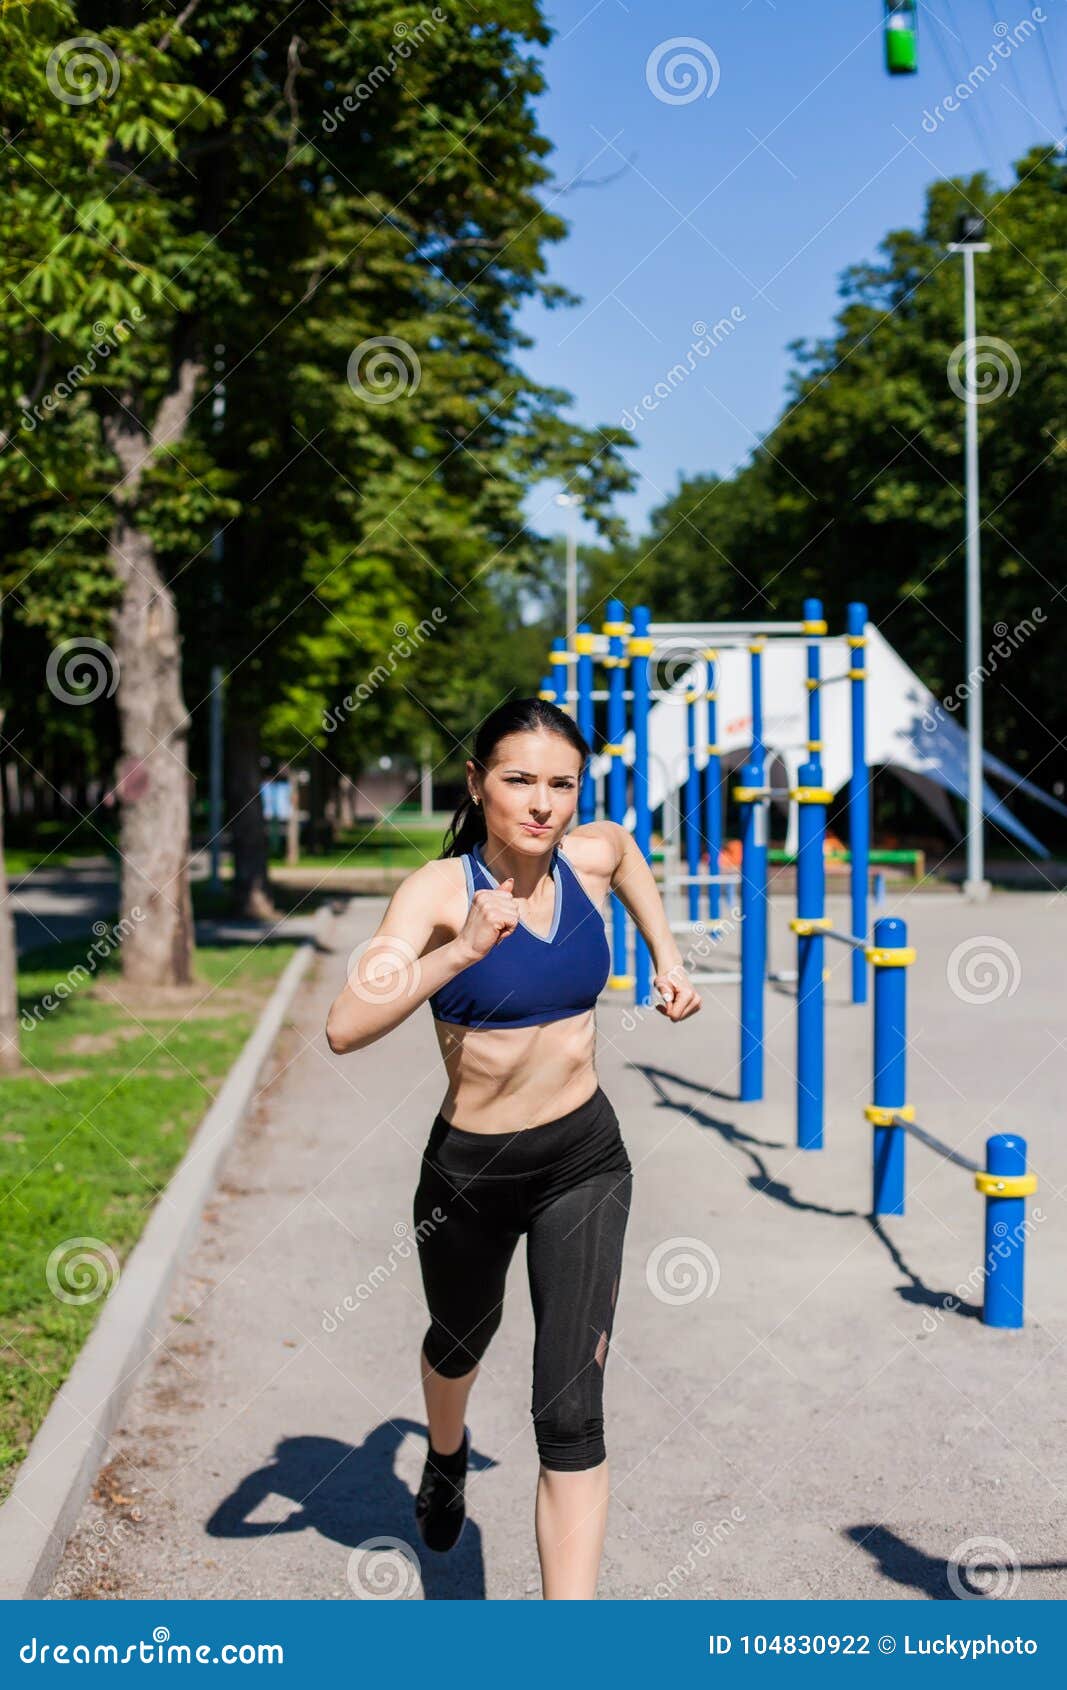 Sports bra and leggings - Playground